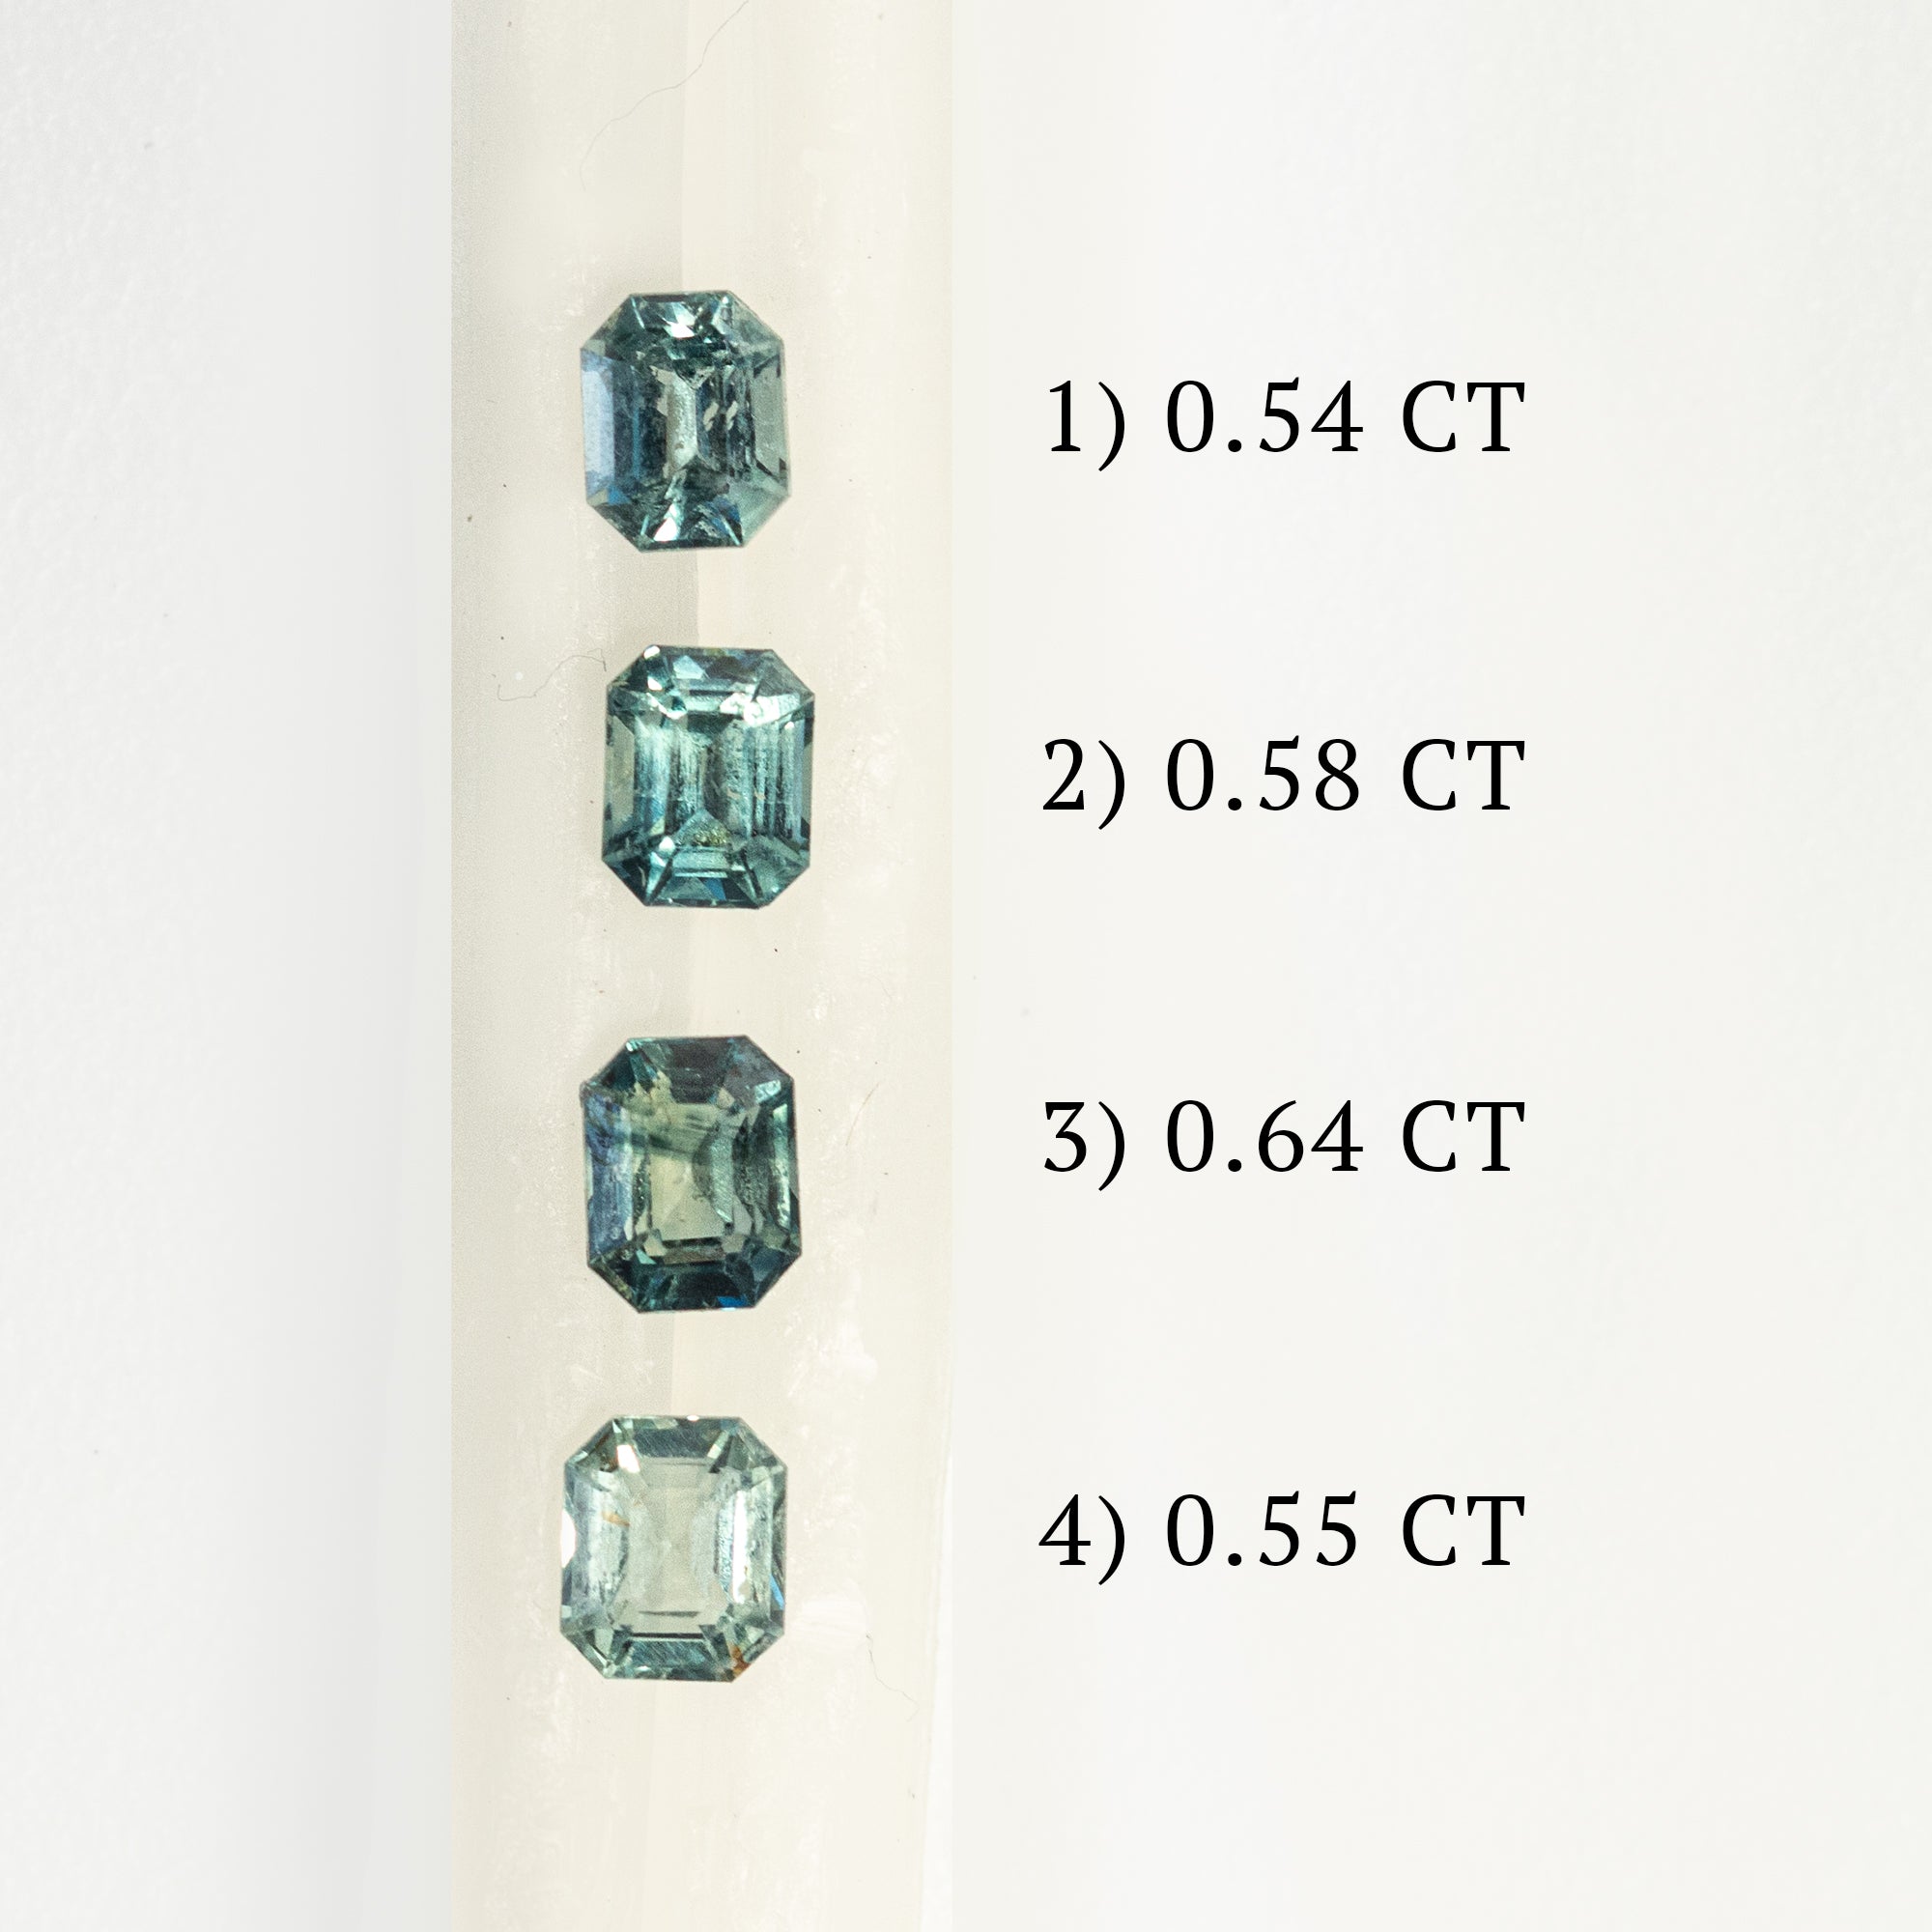 Jamie Park Jewelry - 1/2ct. Emerald Cut Teal Sapphire Sienna Ring